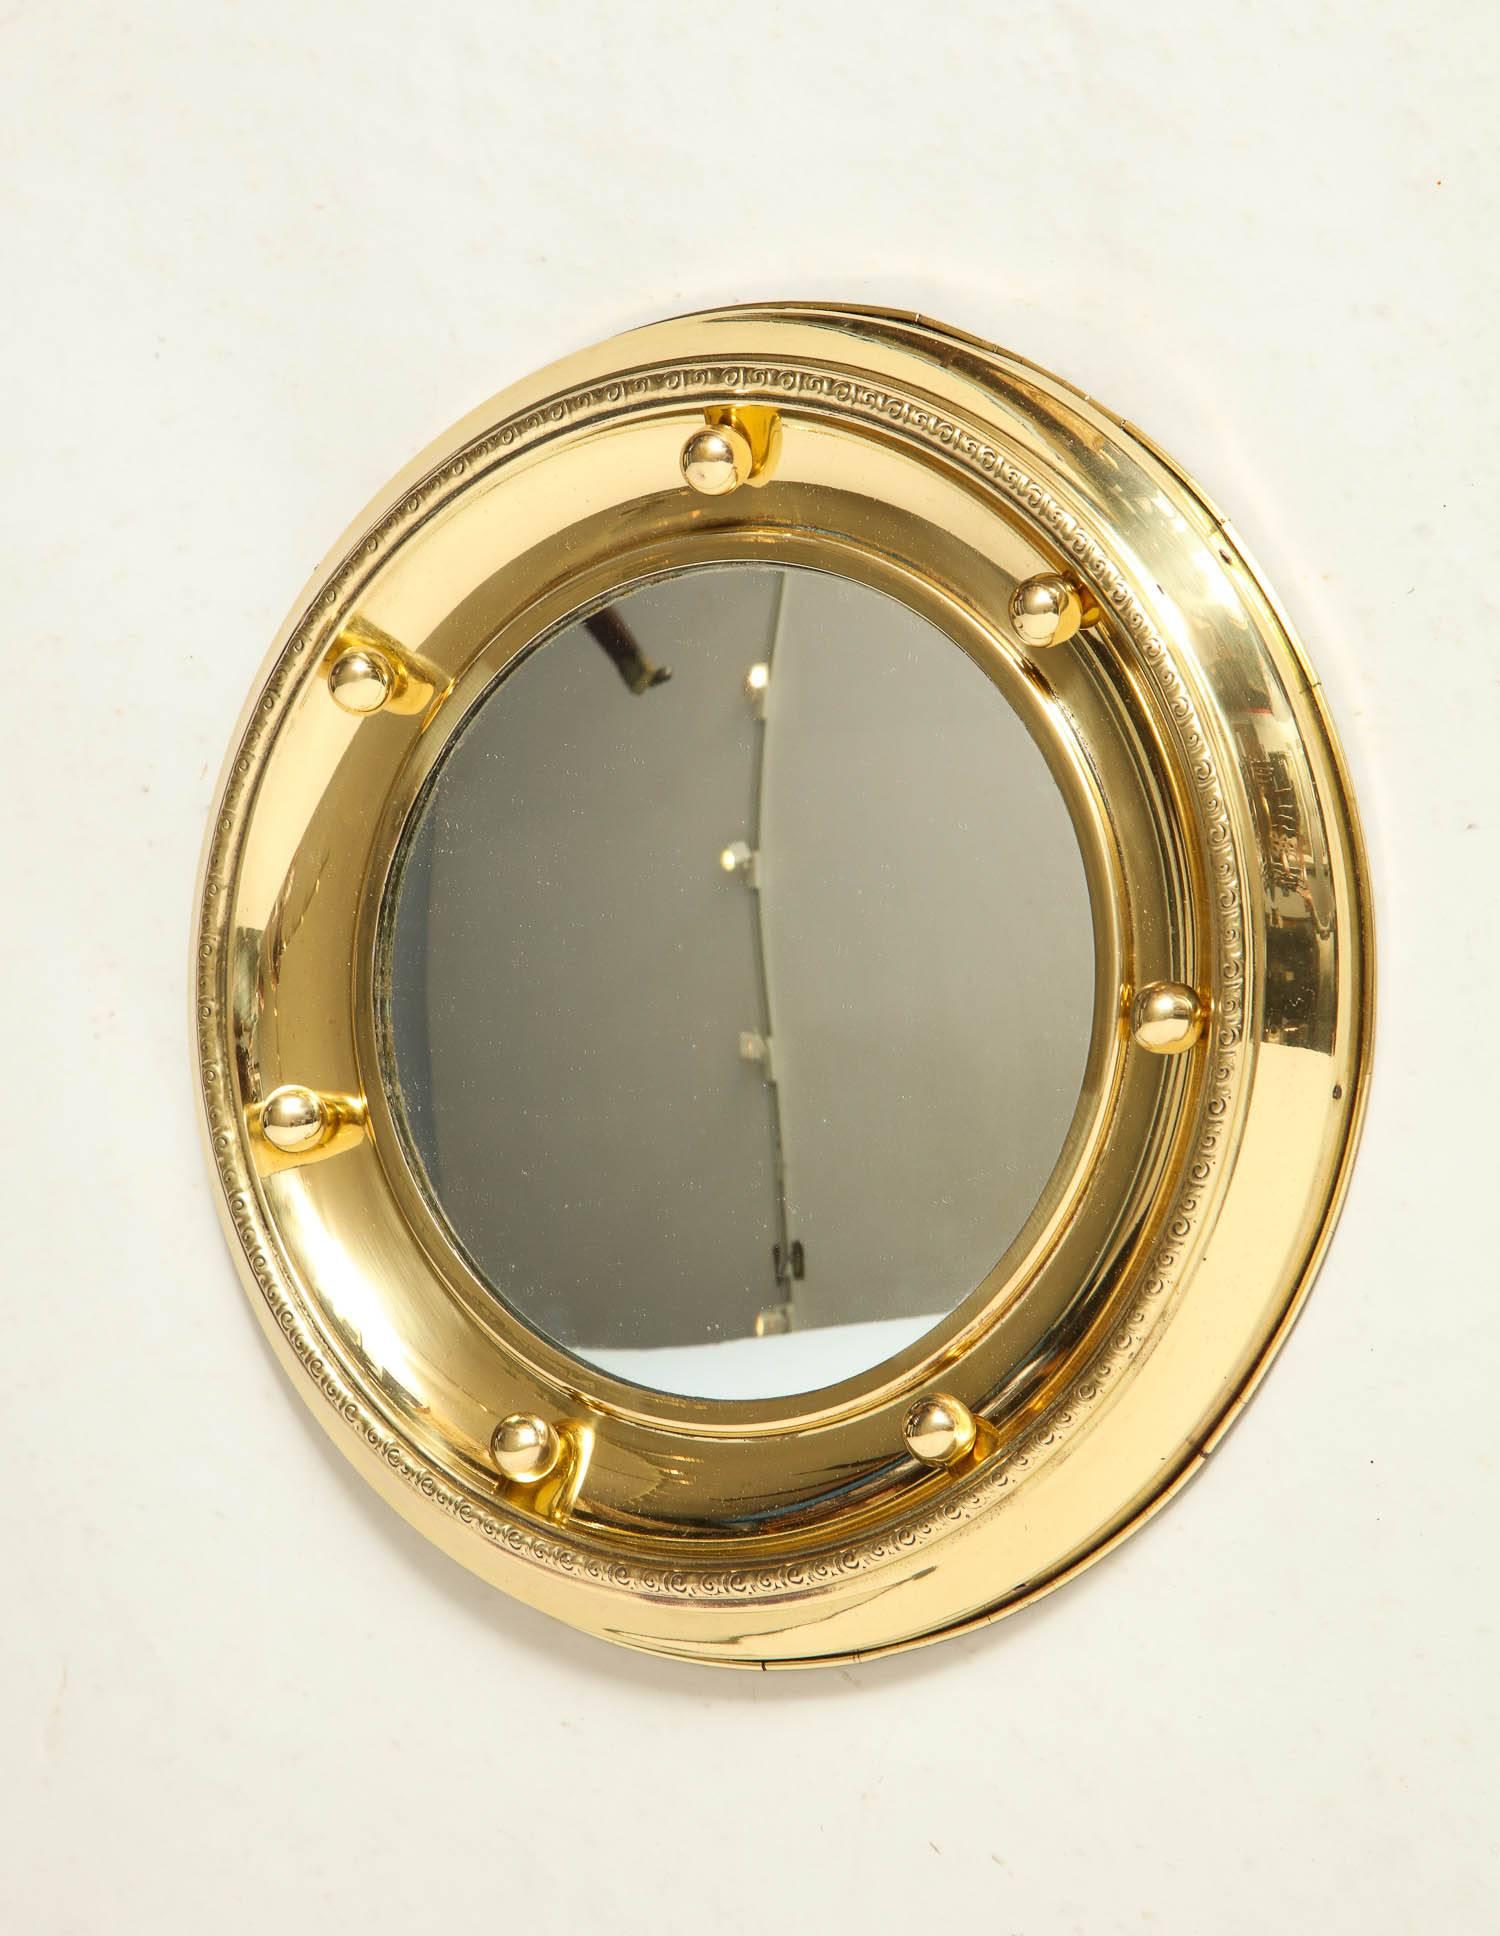 Fun English 1920s brass porthole mirror with original convex glass having seven brass balls.